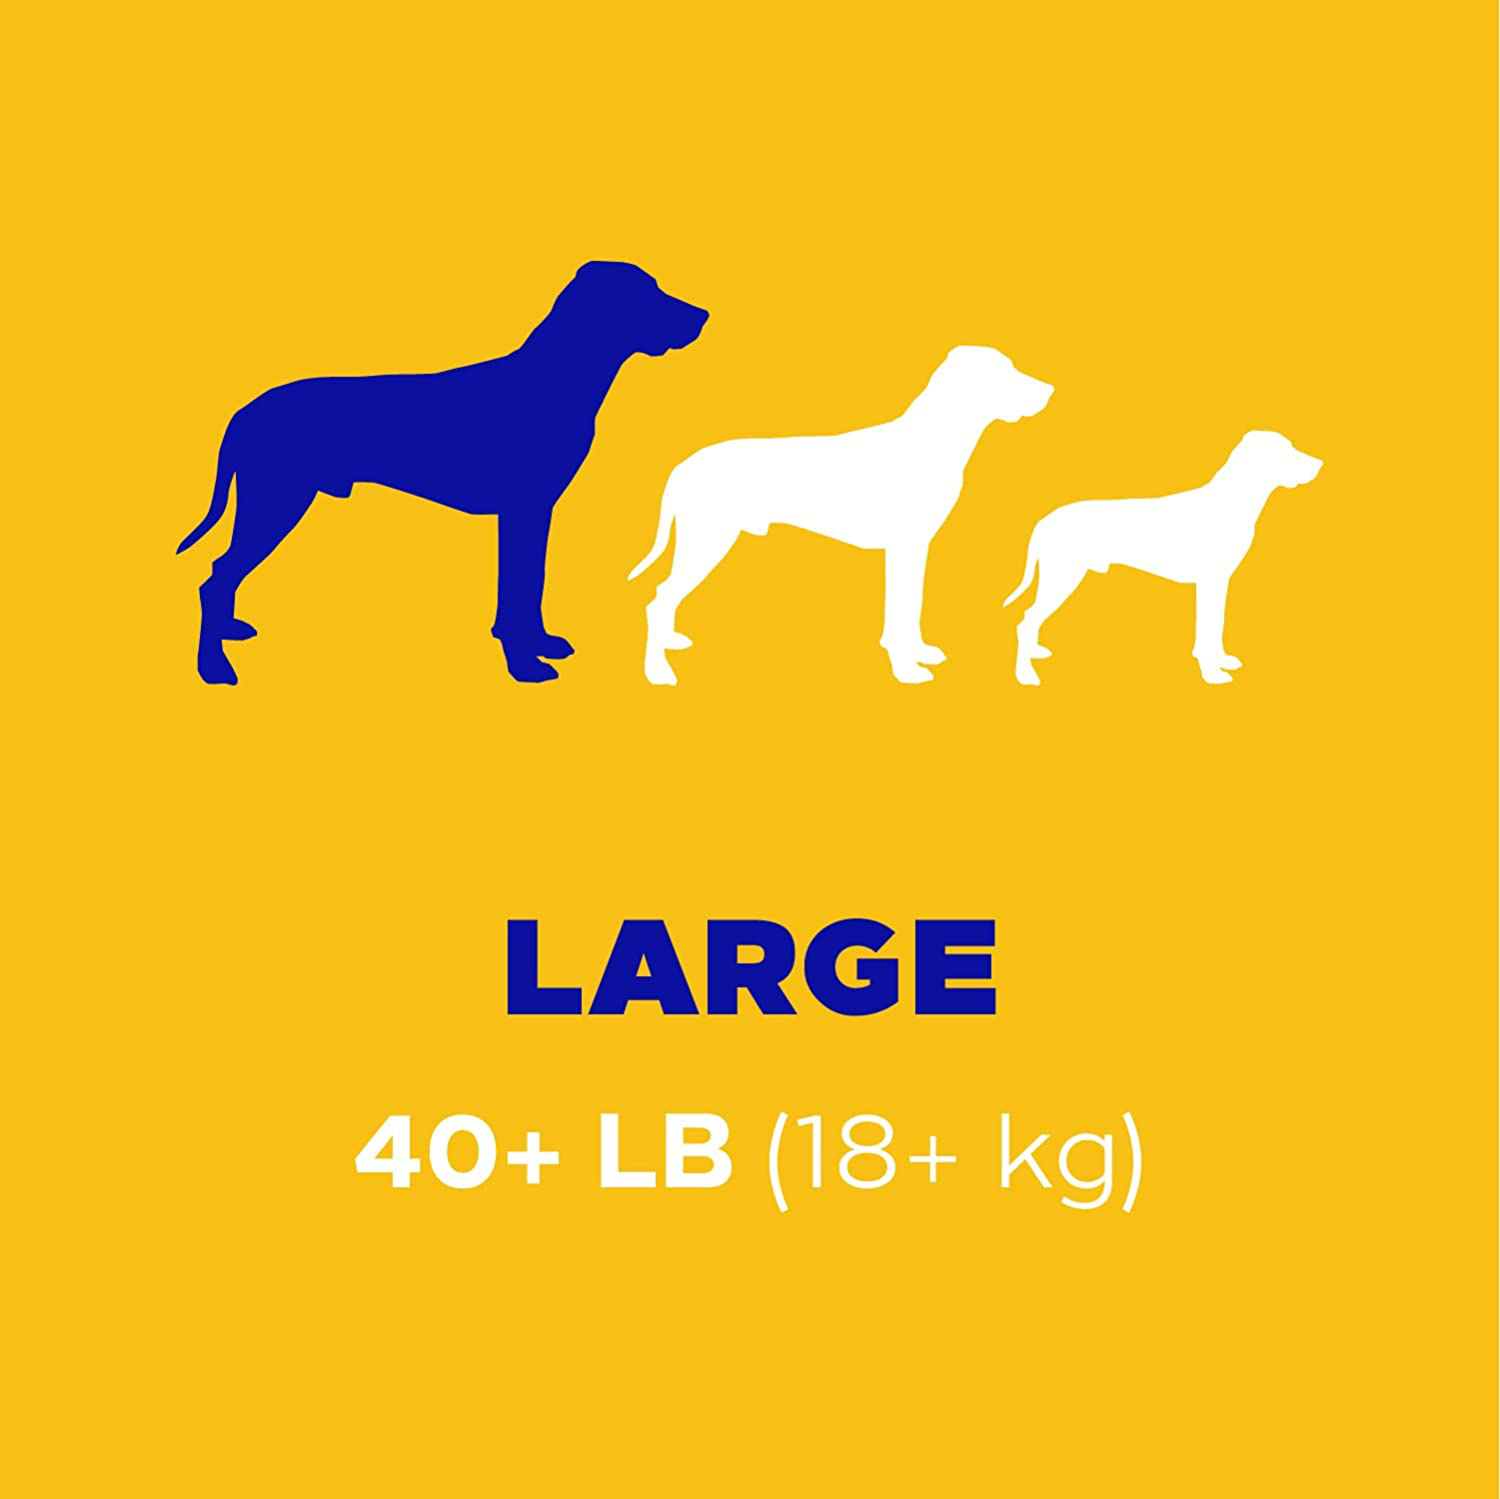 Pedigree DENTASTIX Treats for Large Dogs, 30+ Lbs. Multiple Flavors